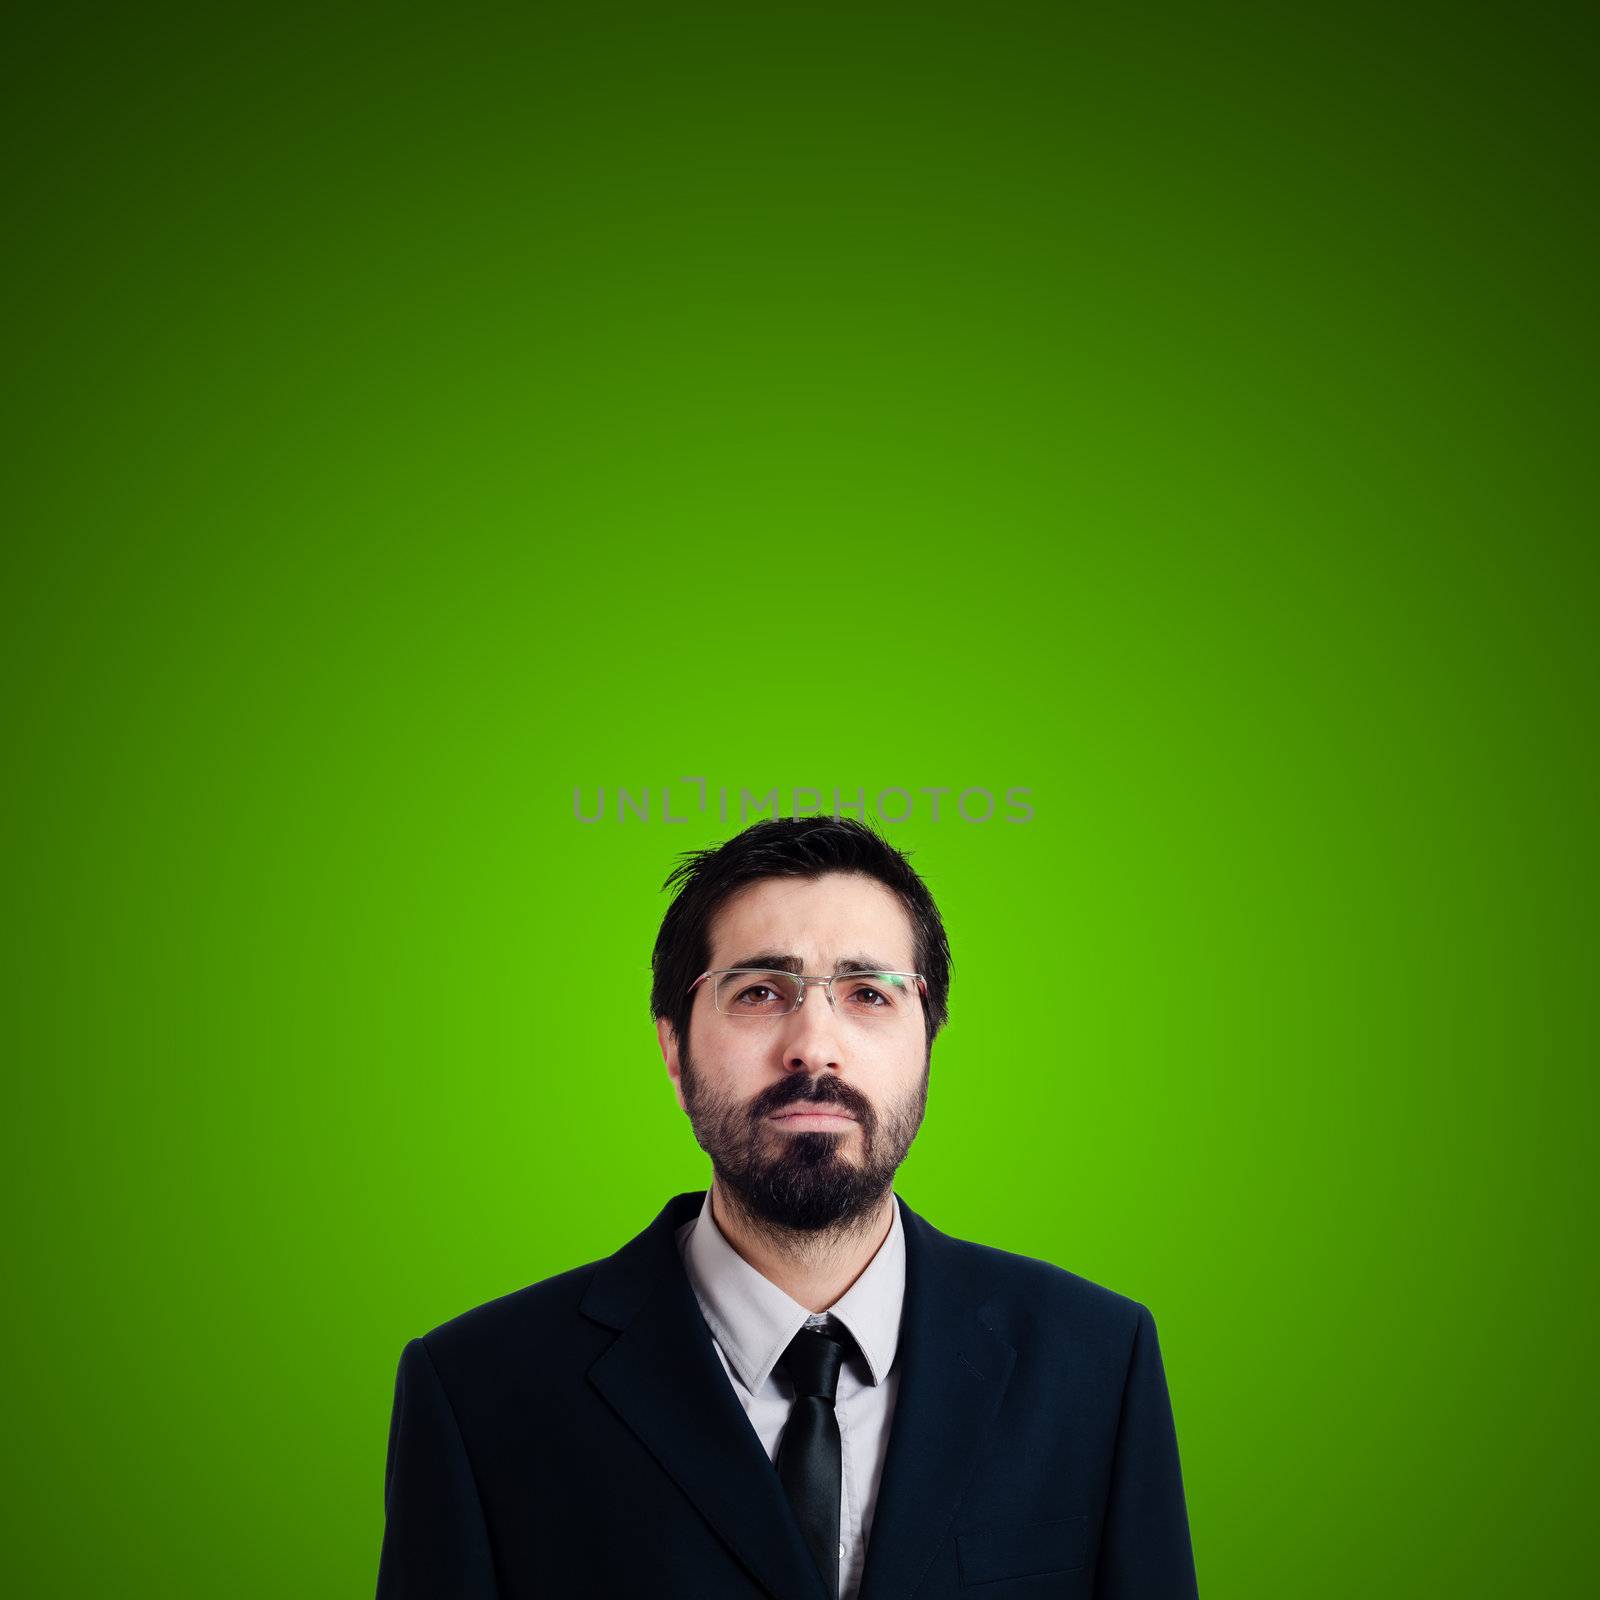 sad businessman on green background